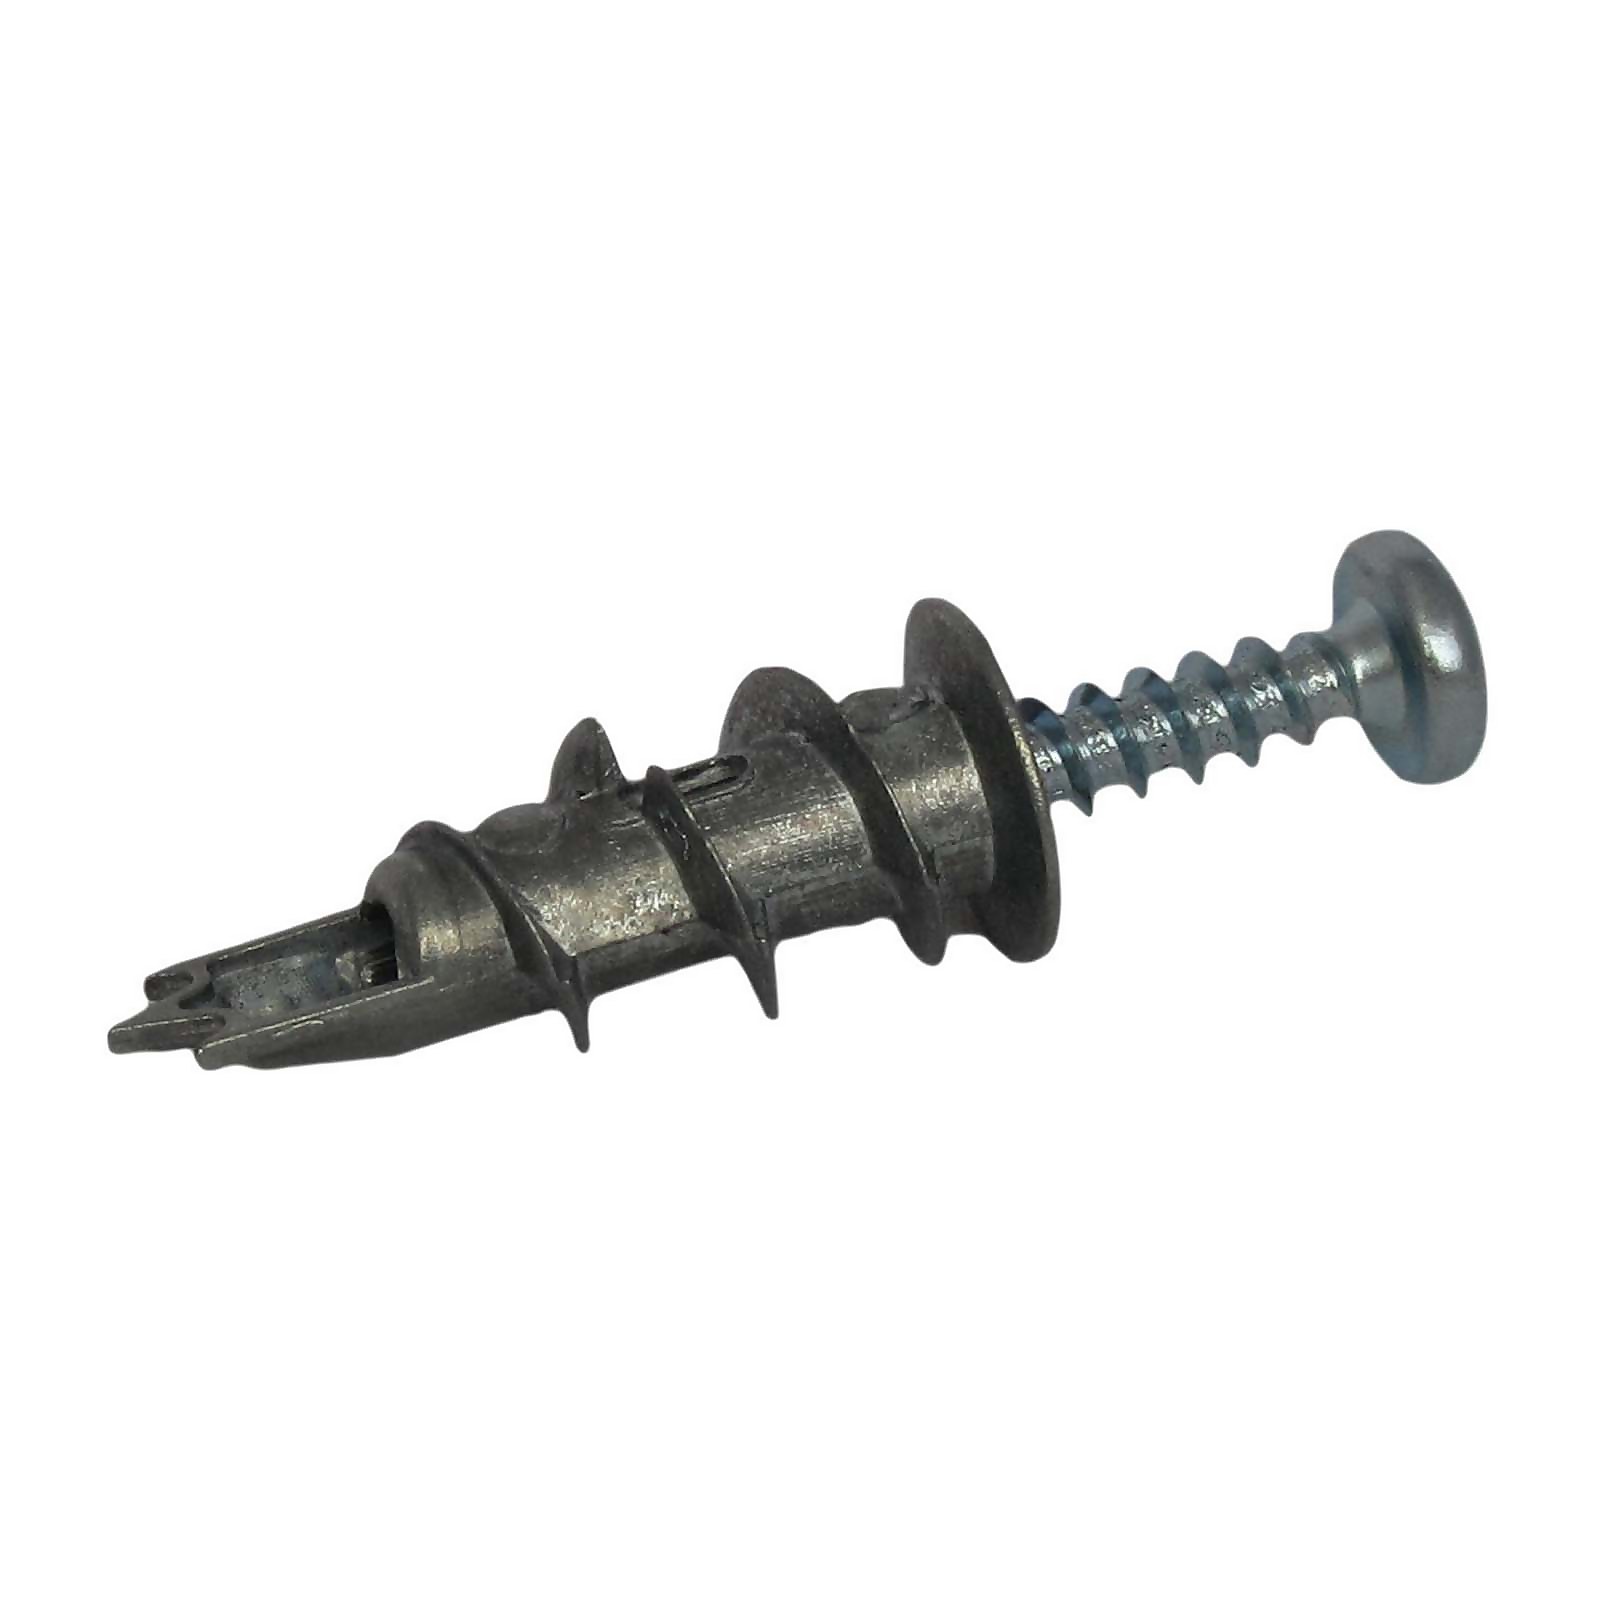 Photo of Rawlplug Metal Self Drill Fixing - Pack Of 25